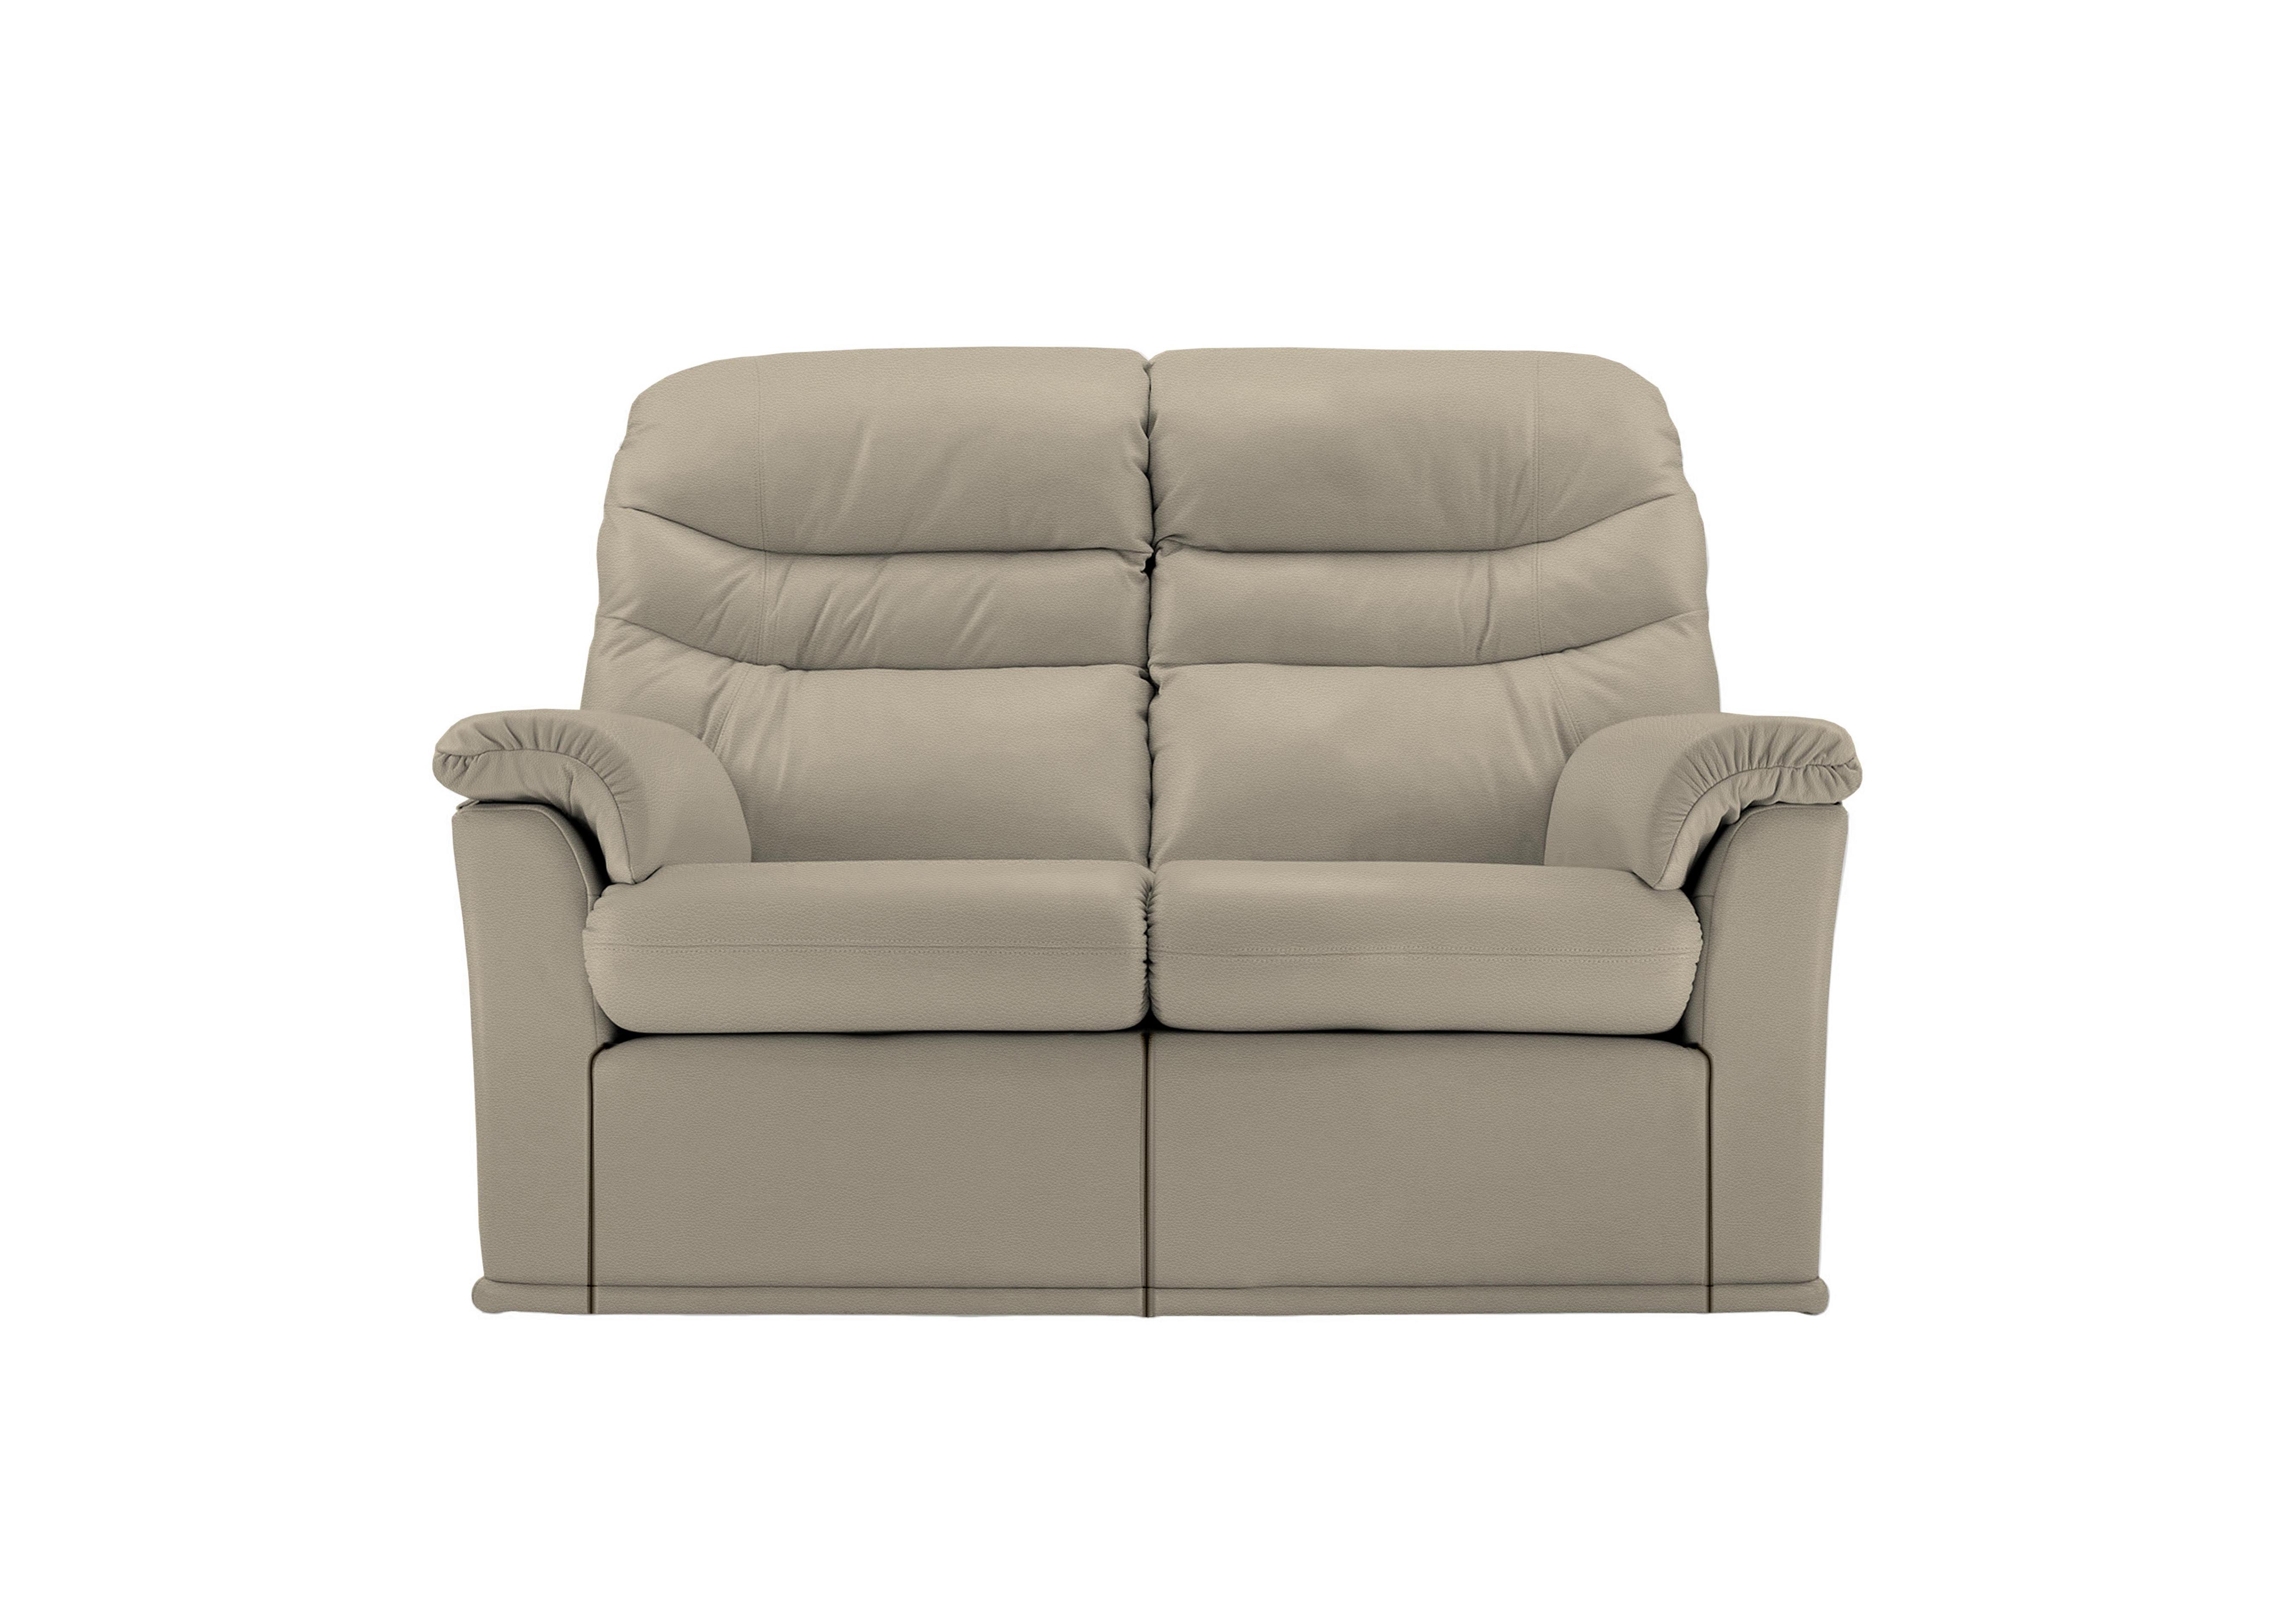 Malvern 2 Seater Leather Sofa in H001 Oxford Mushroom on Furniture Village